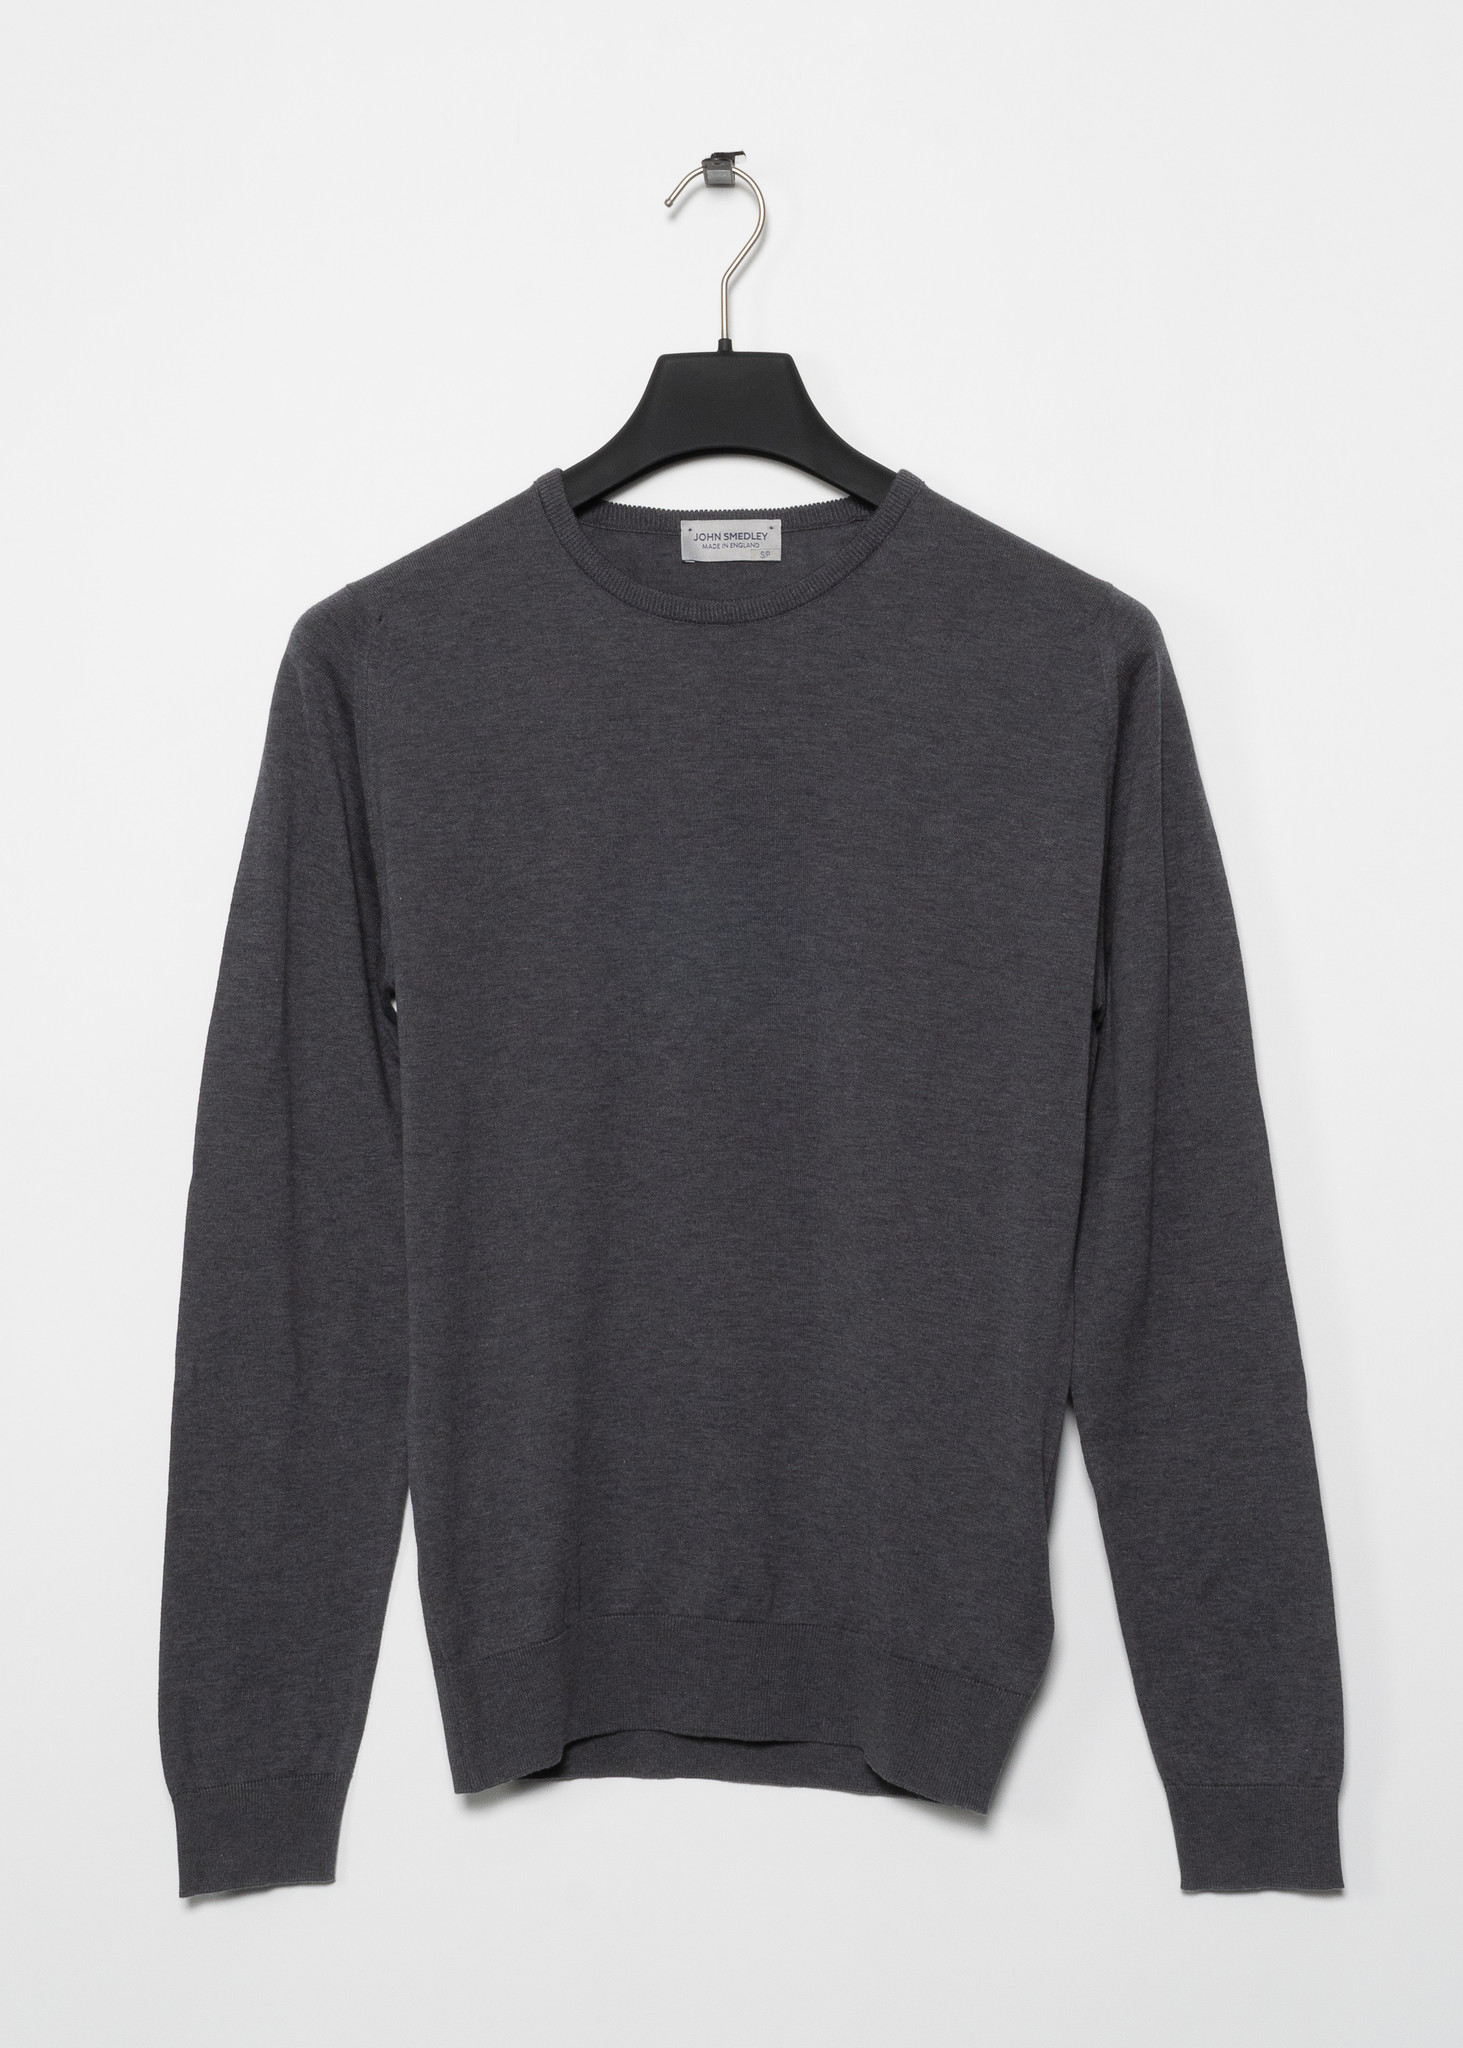 Charcoal Hatfield Sweater